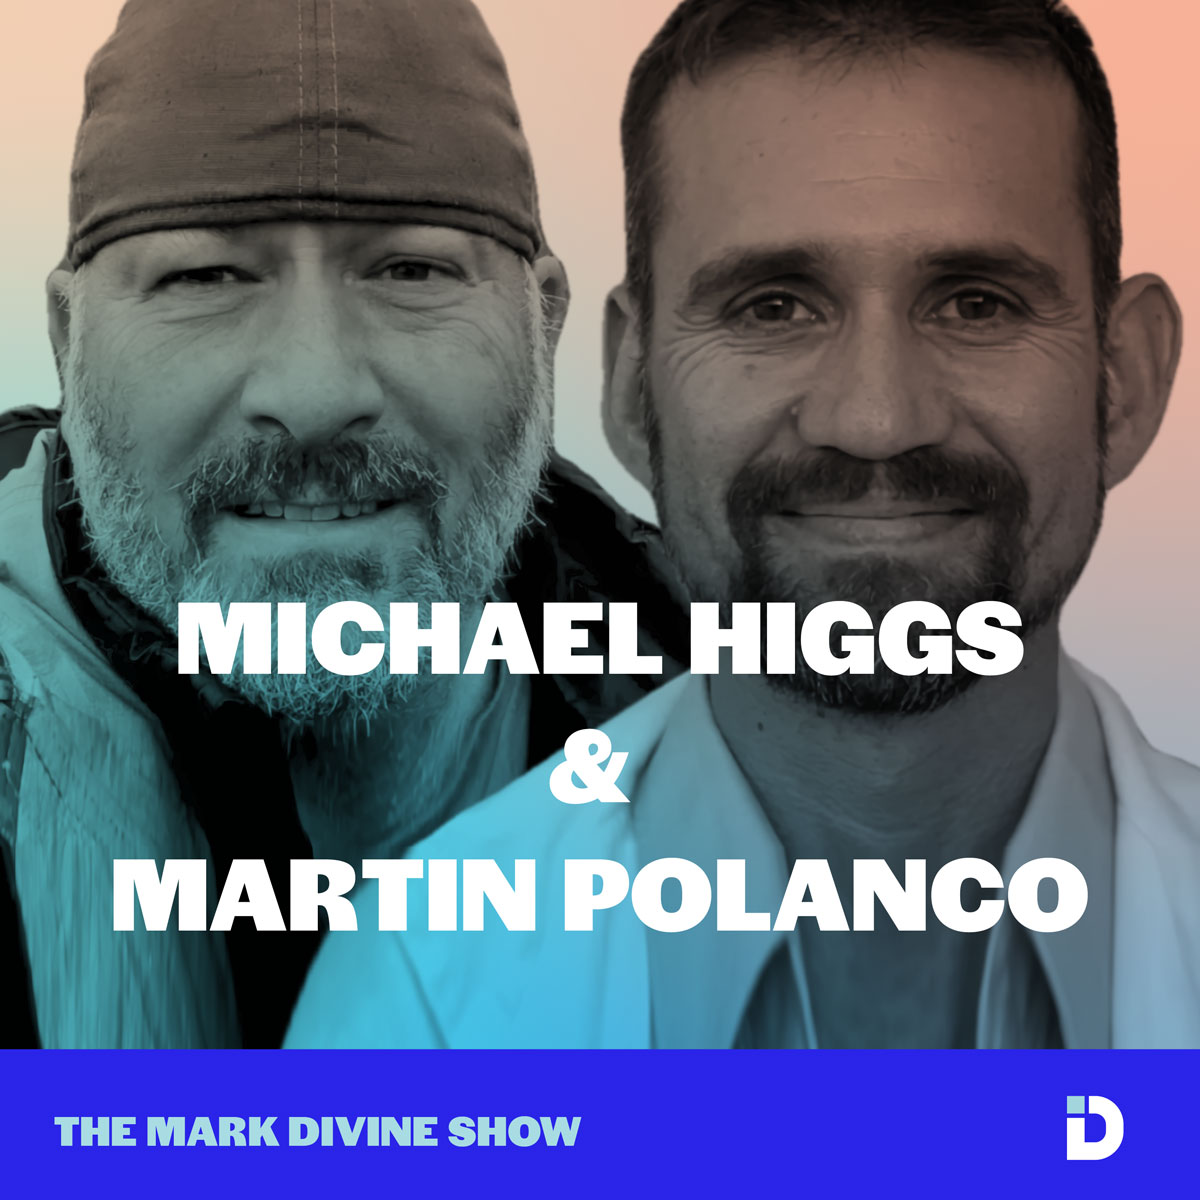 Michael Higgs and Martin Polanco